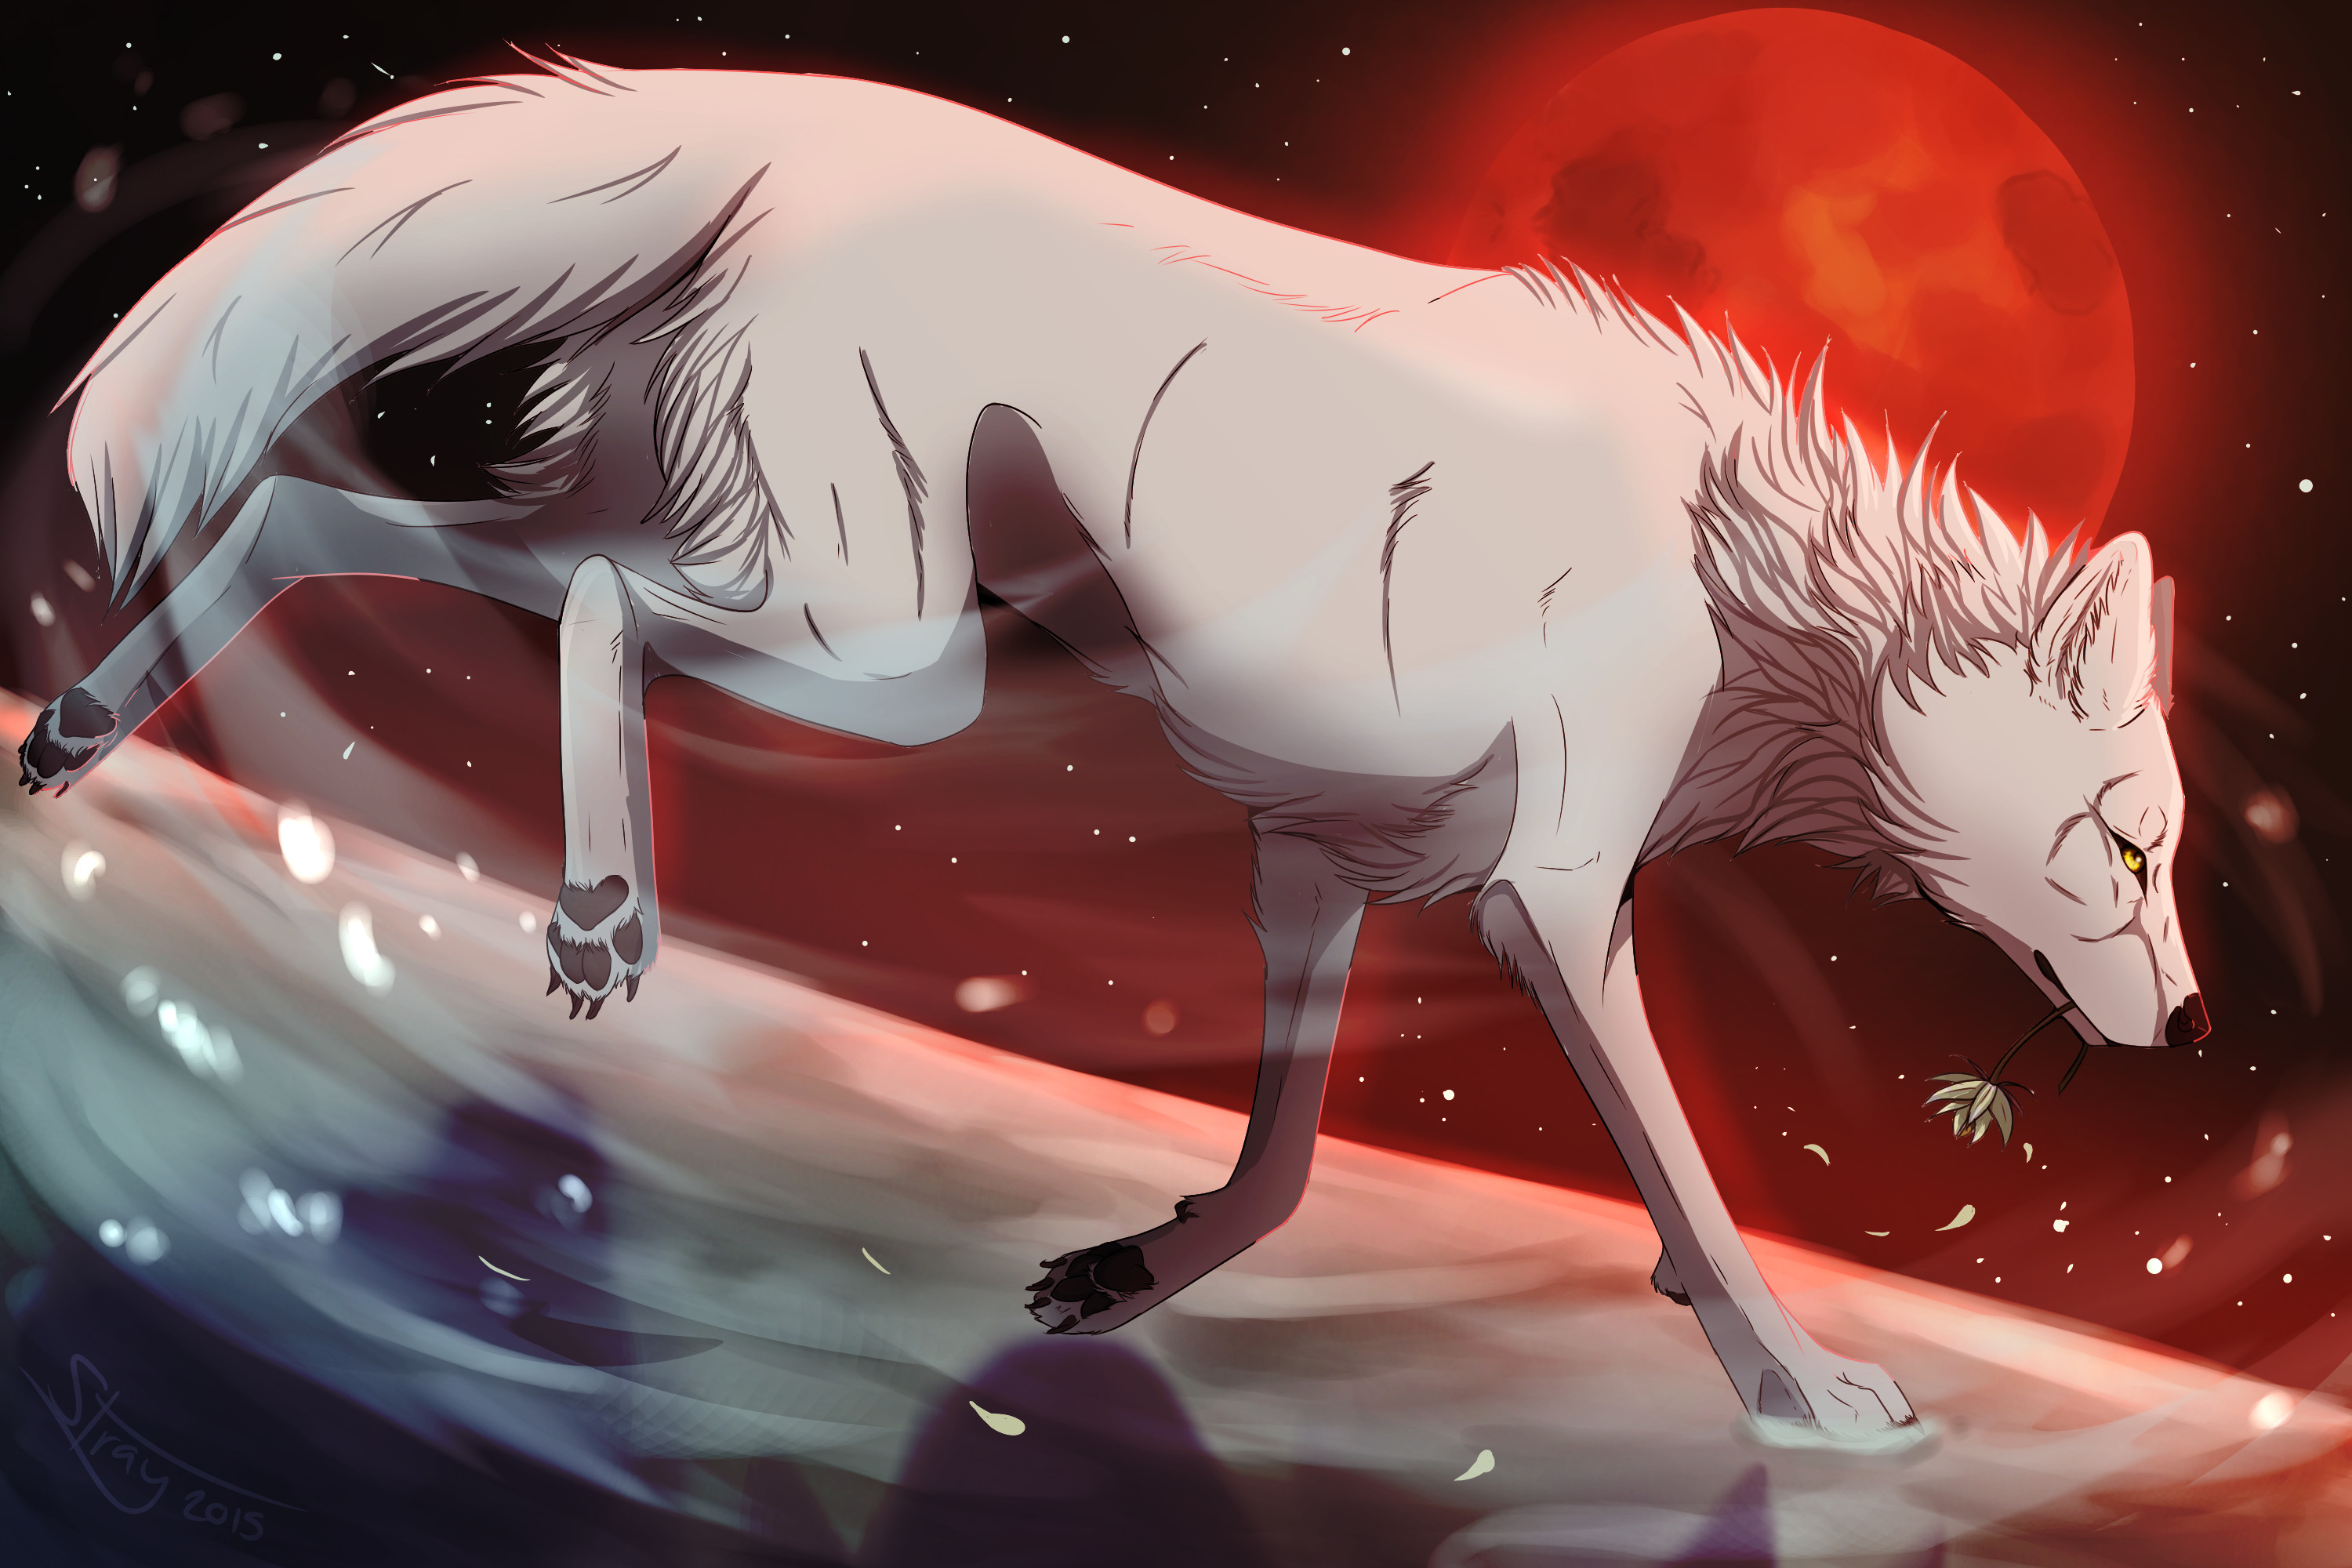 Animated wolf